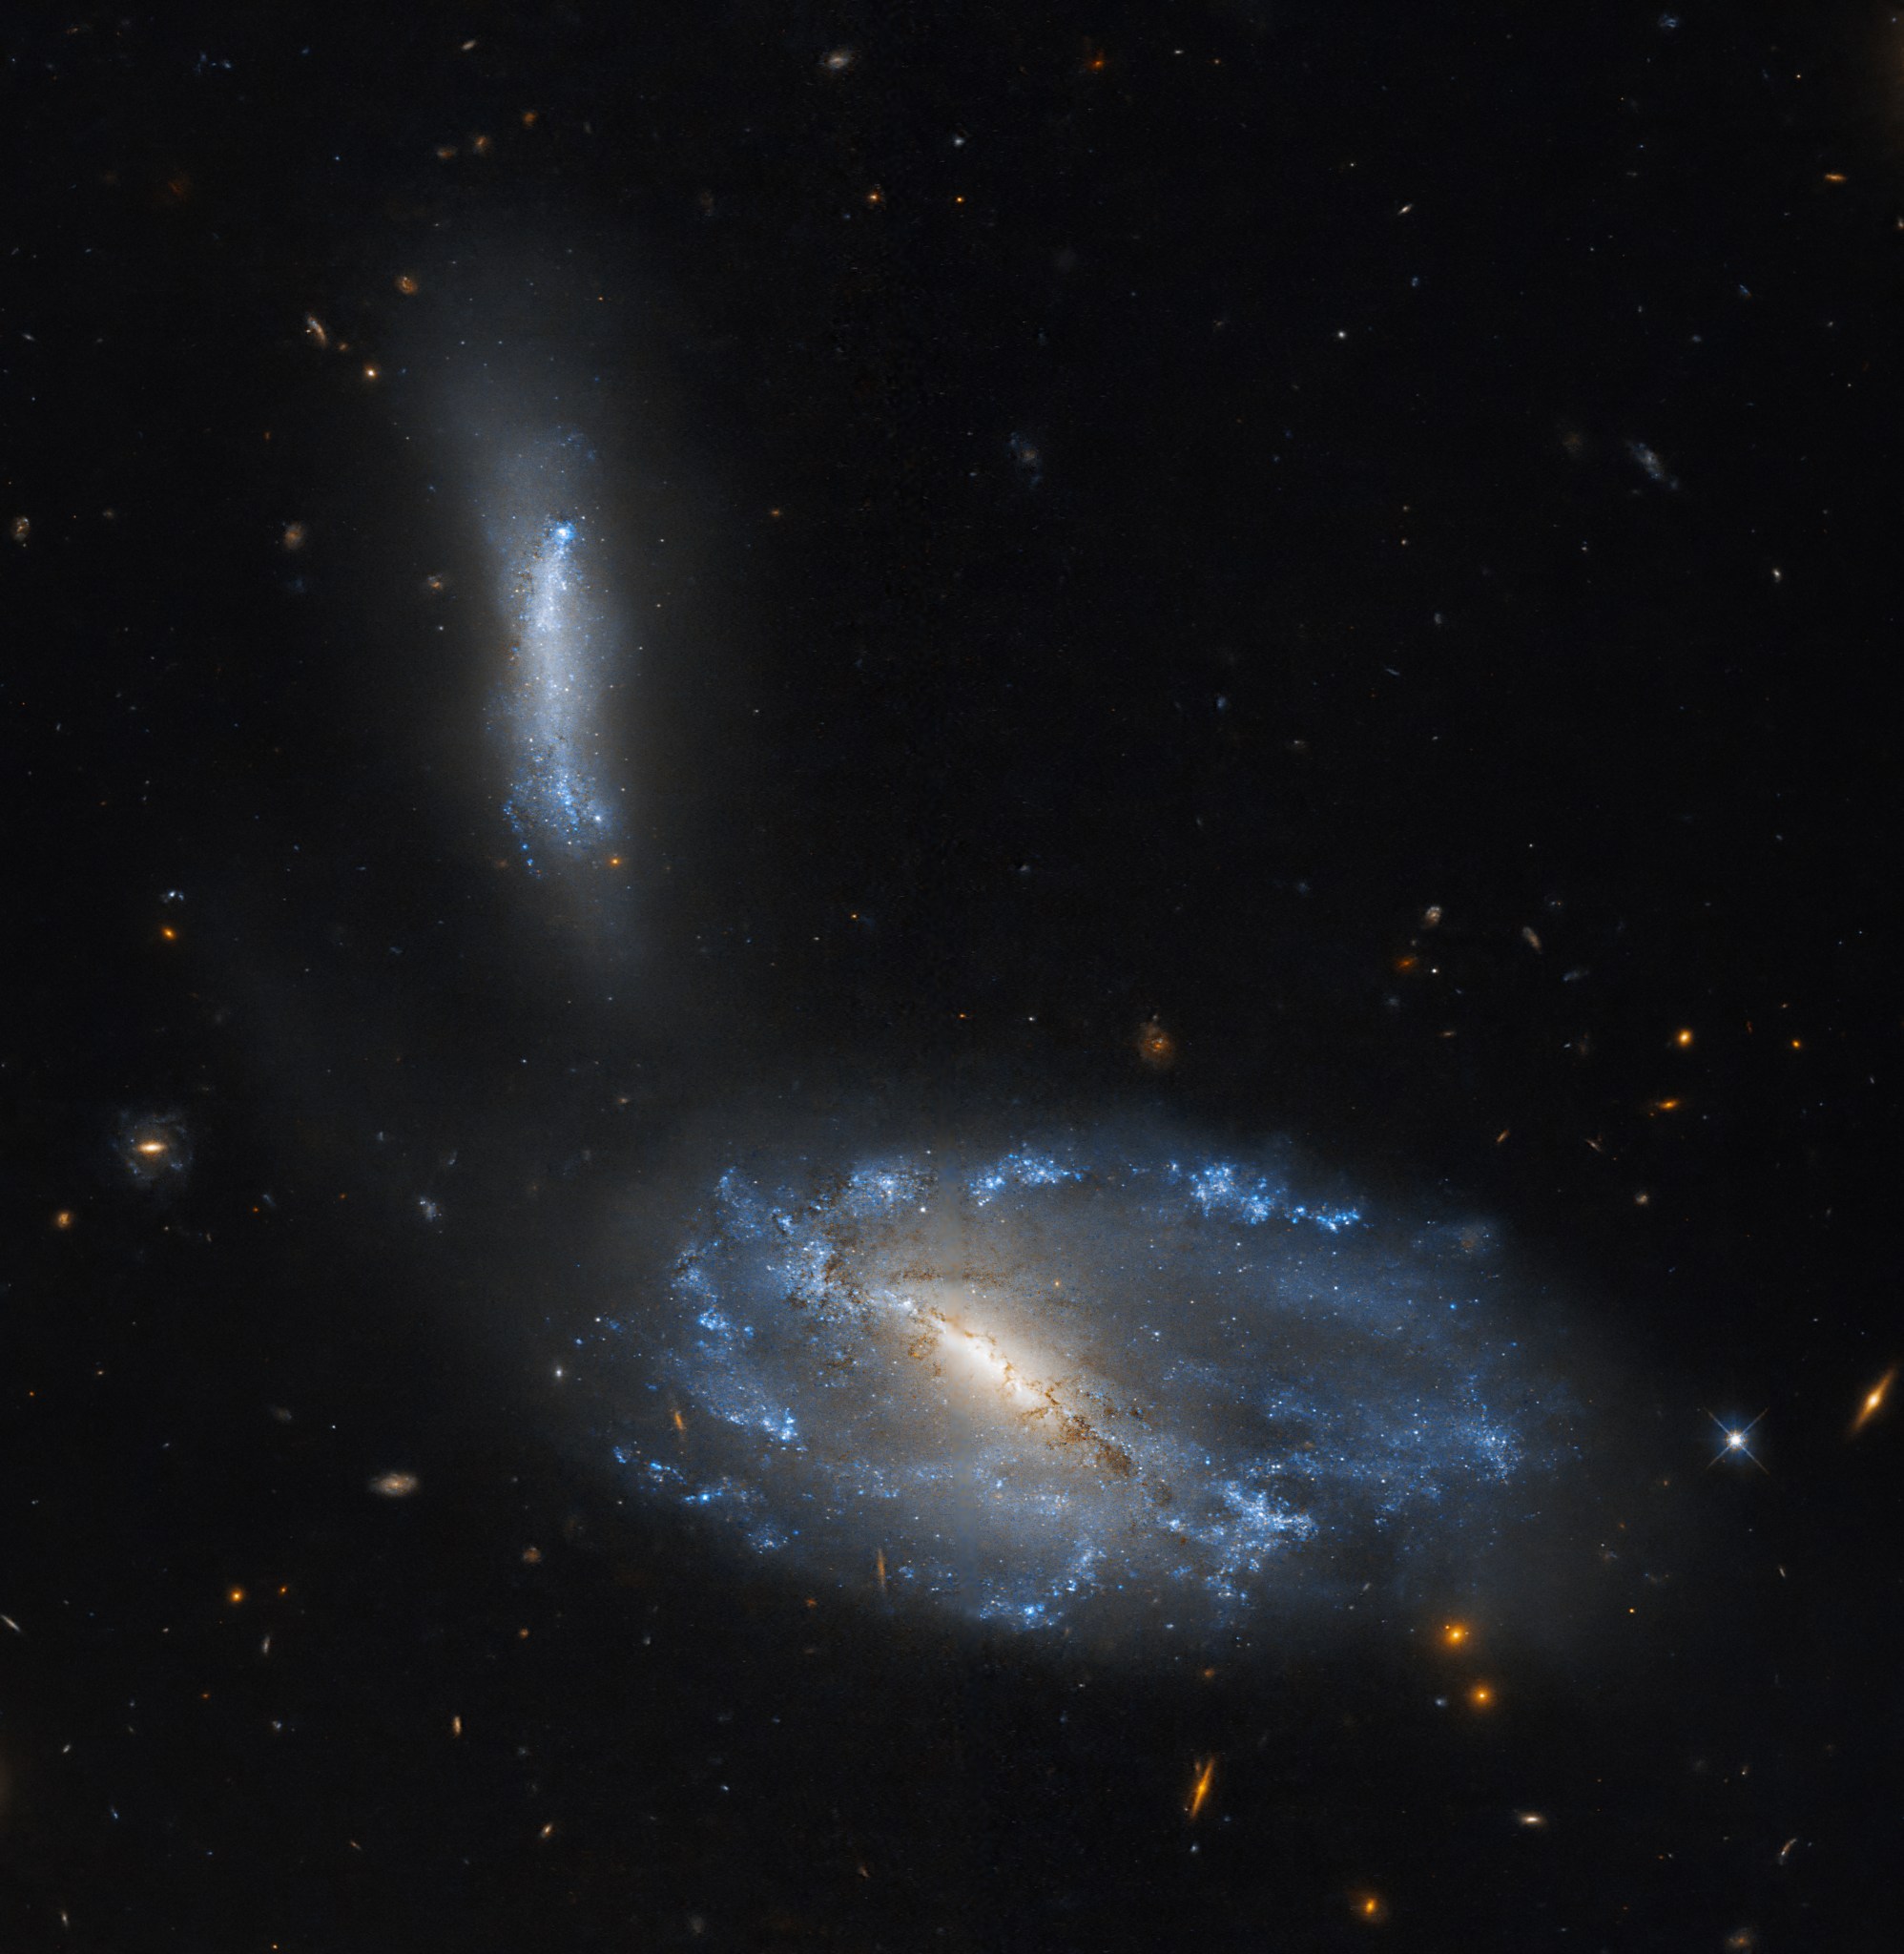 Hubble Studies a Sparkling Galaxy Pair